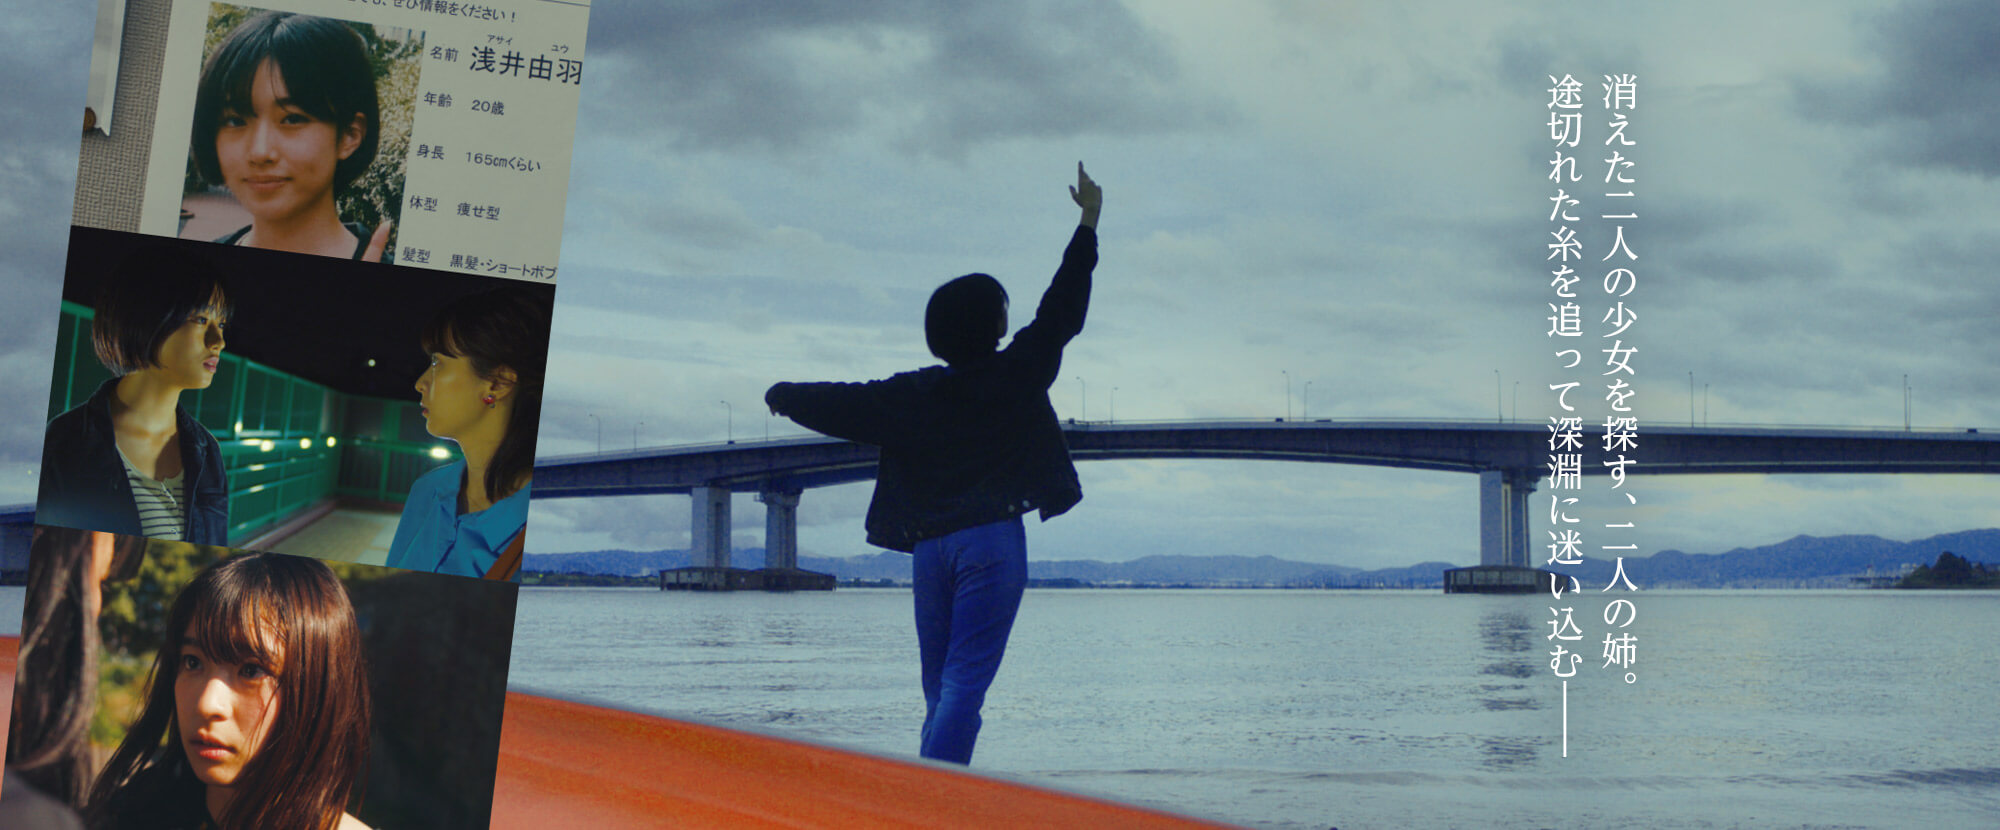 Unfeigned Happy Ending (Itsuwari no Nai) film - Daisuke Matsuo